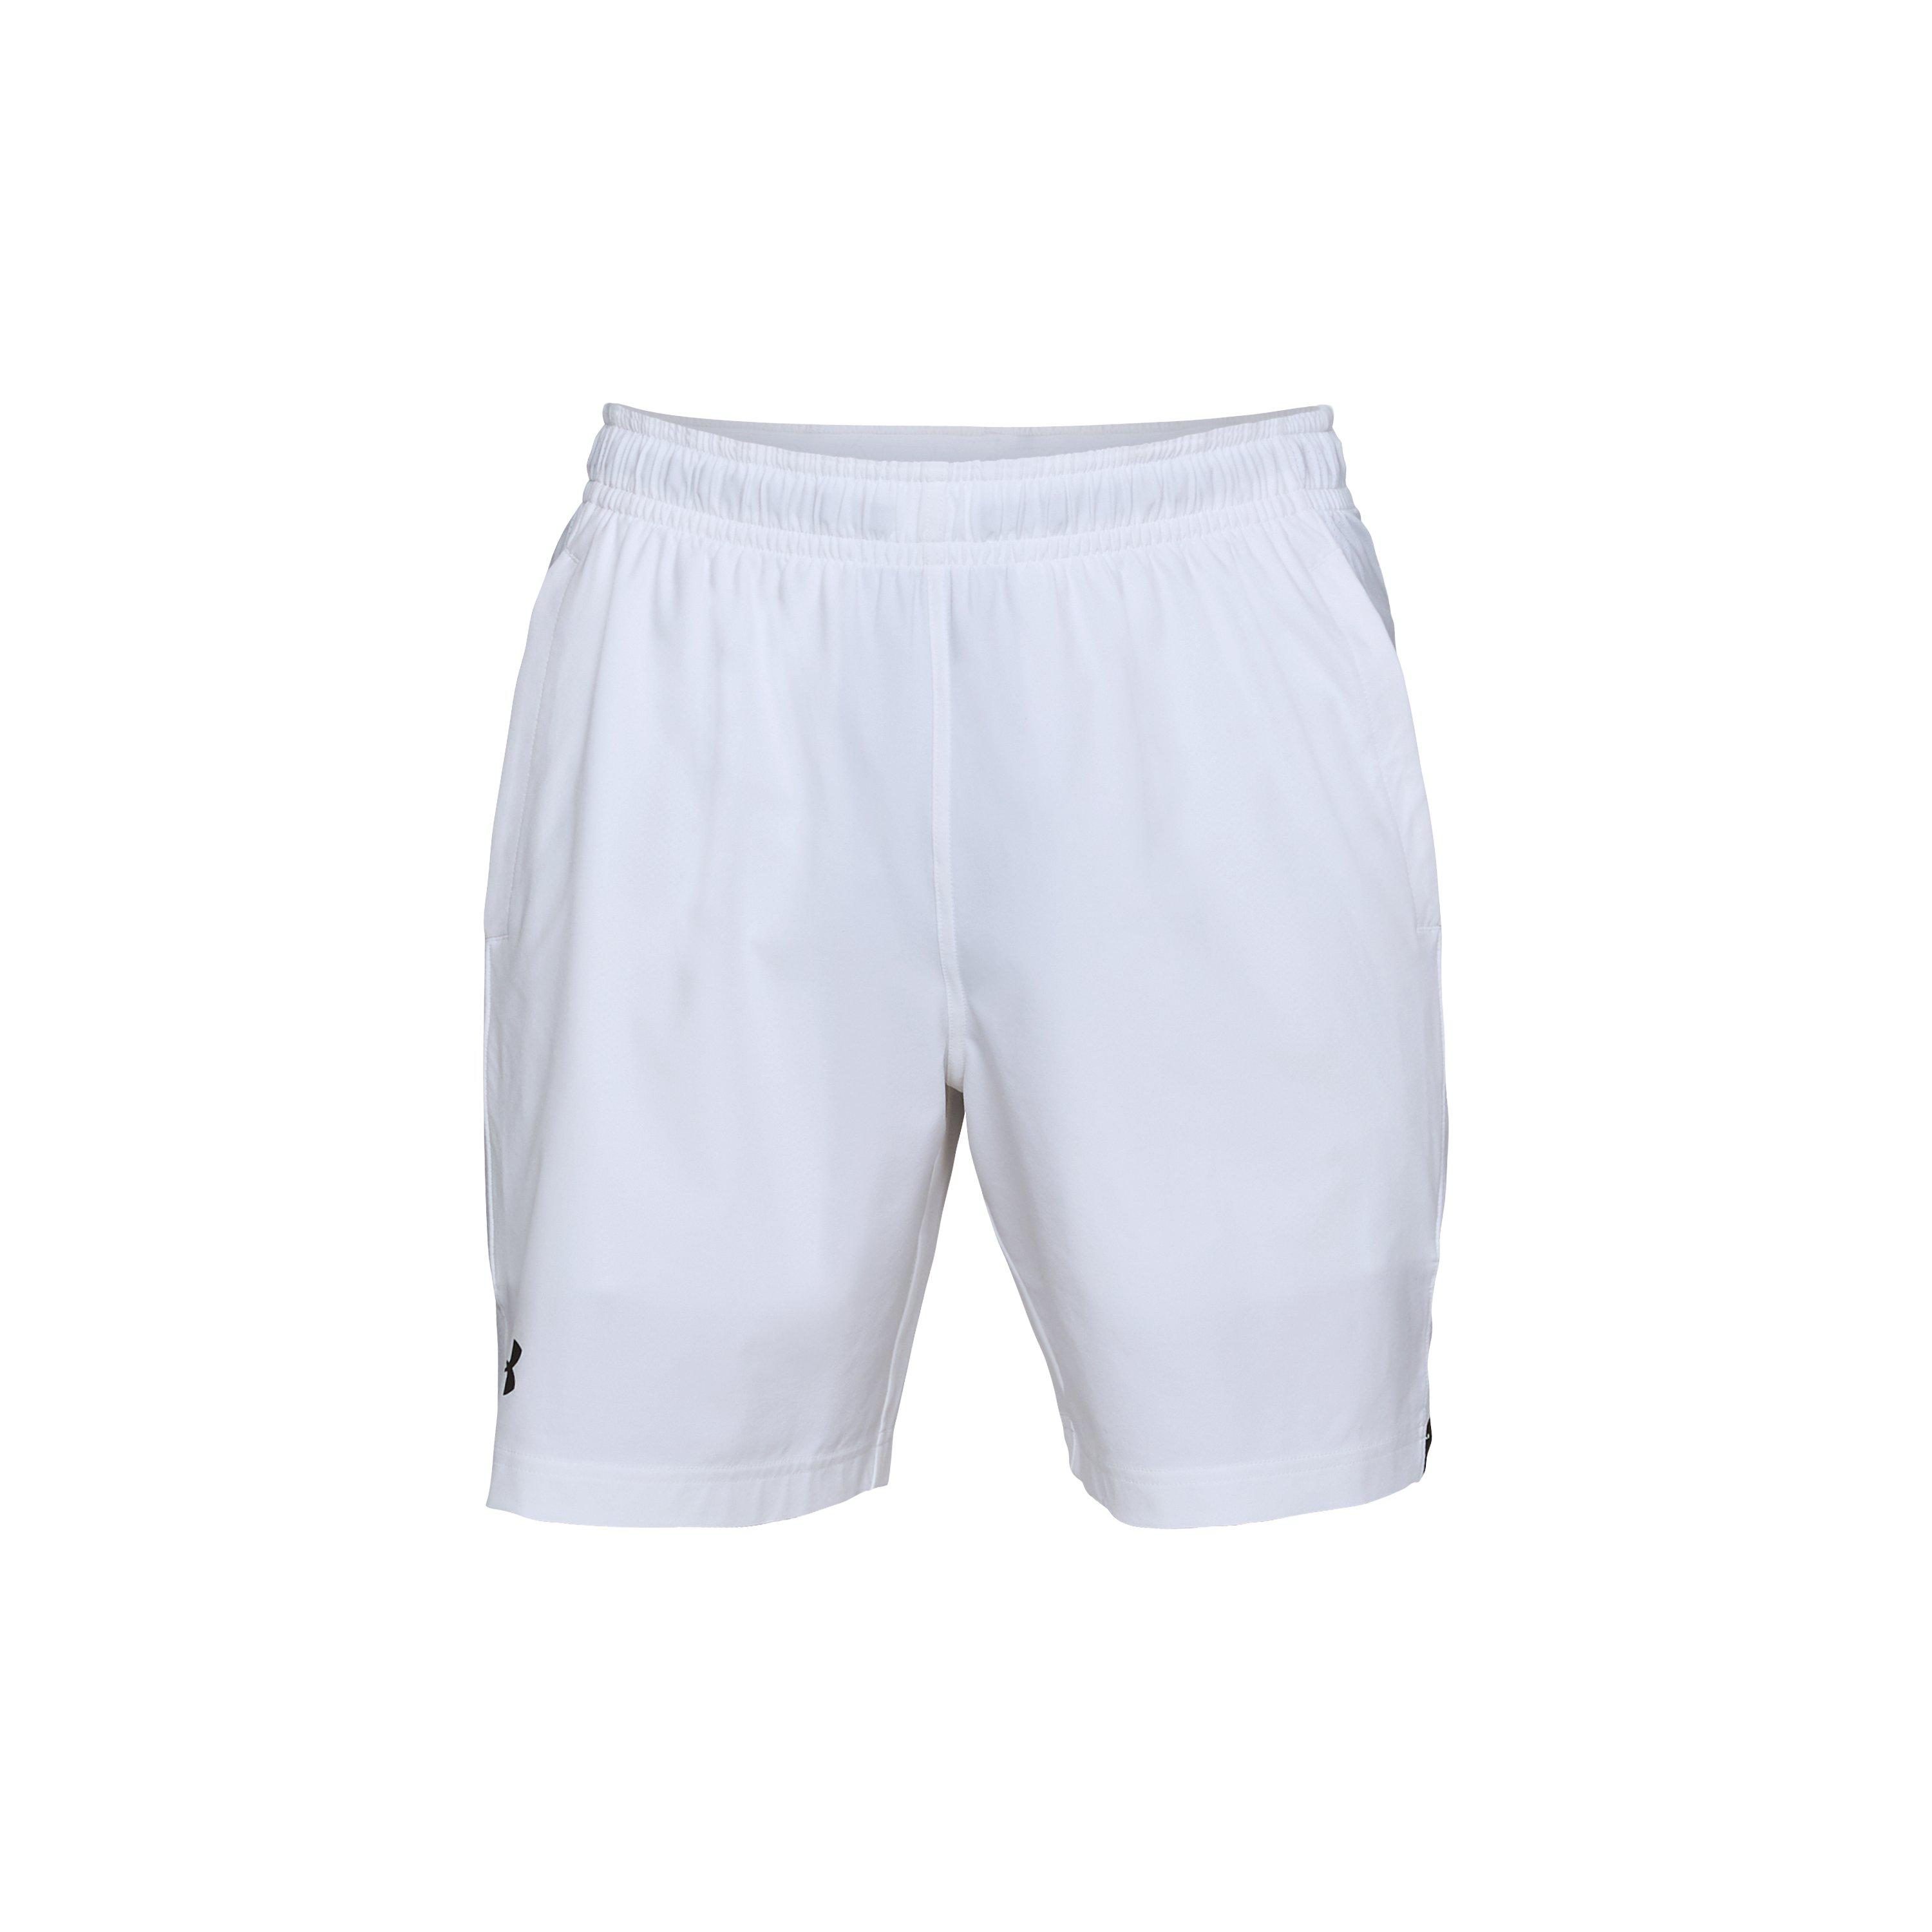 under armour men's tennis shorts